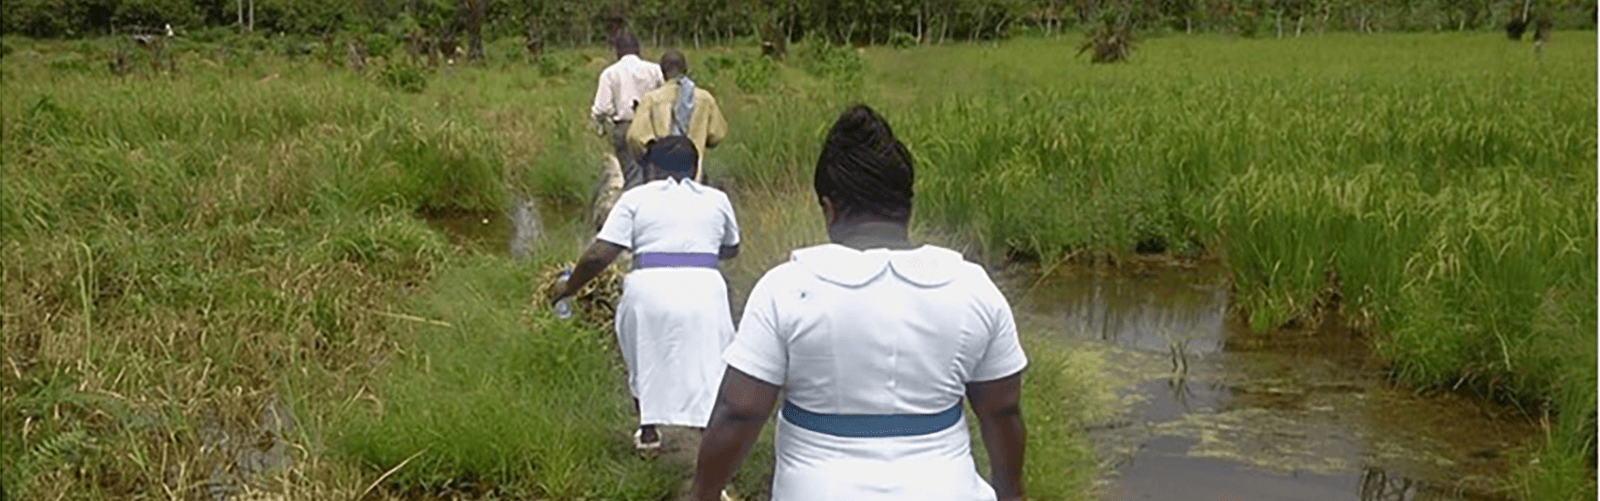 Ghana community health workers crossing difficult terrain